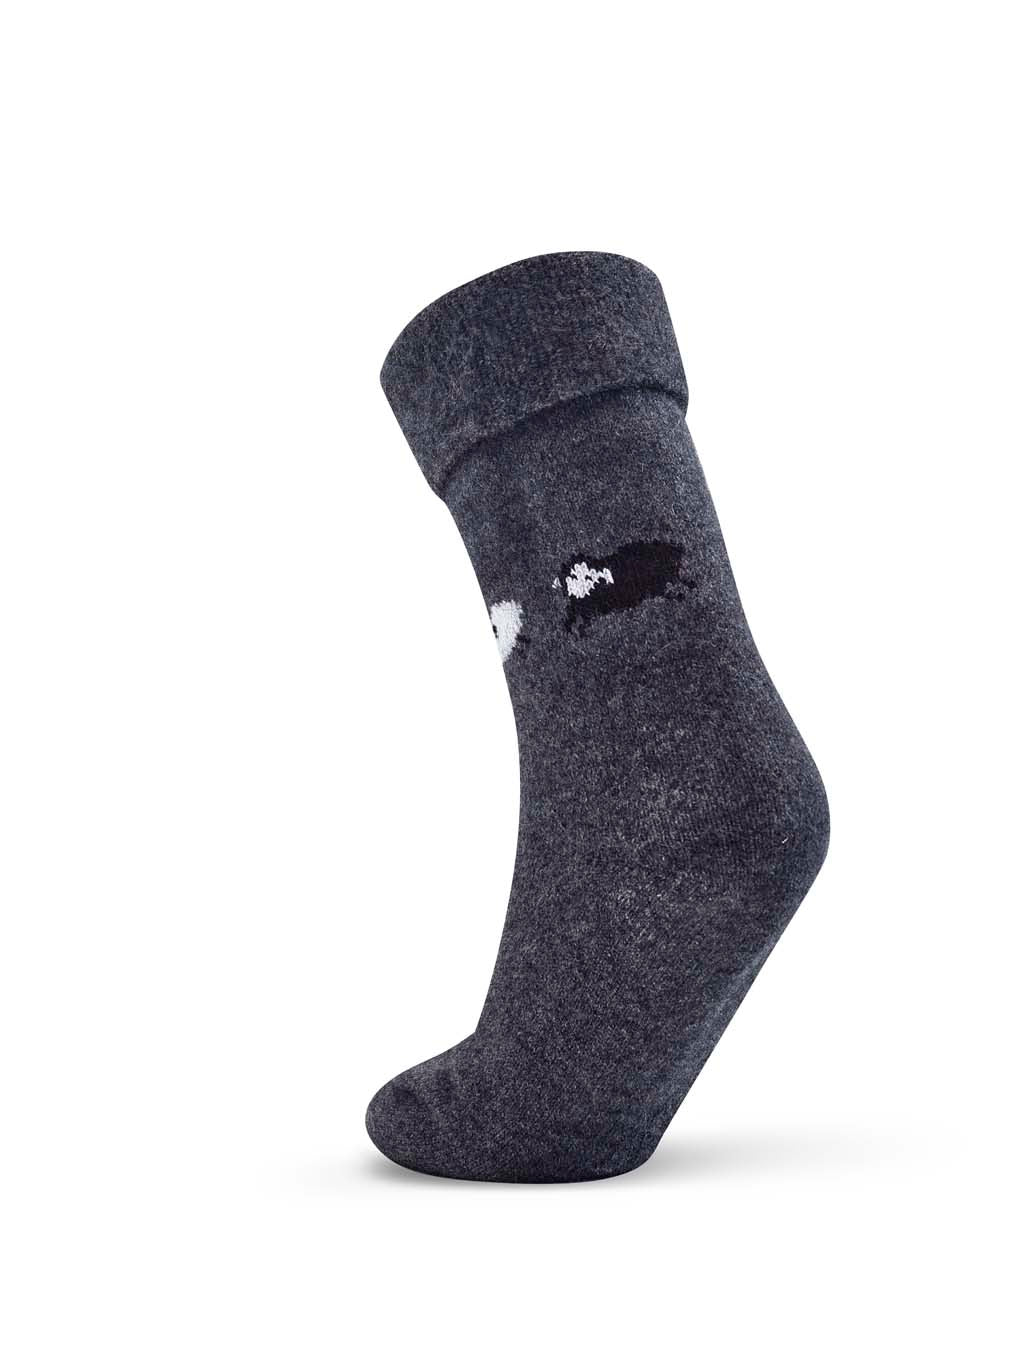 Possum Merino Bed Socks (Sheep) - Pebble Grey